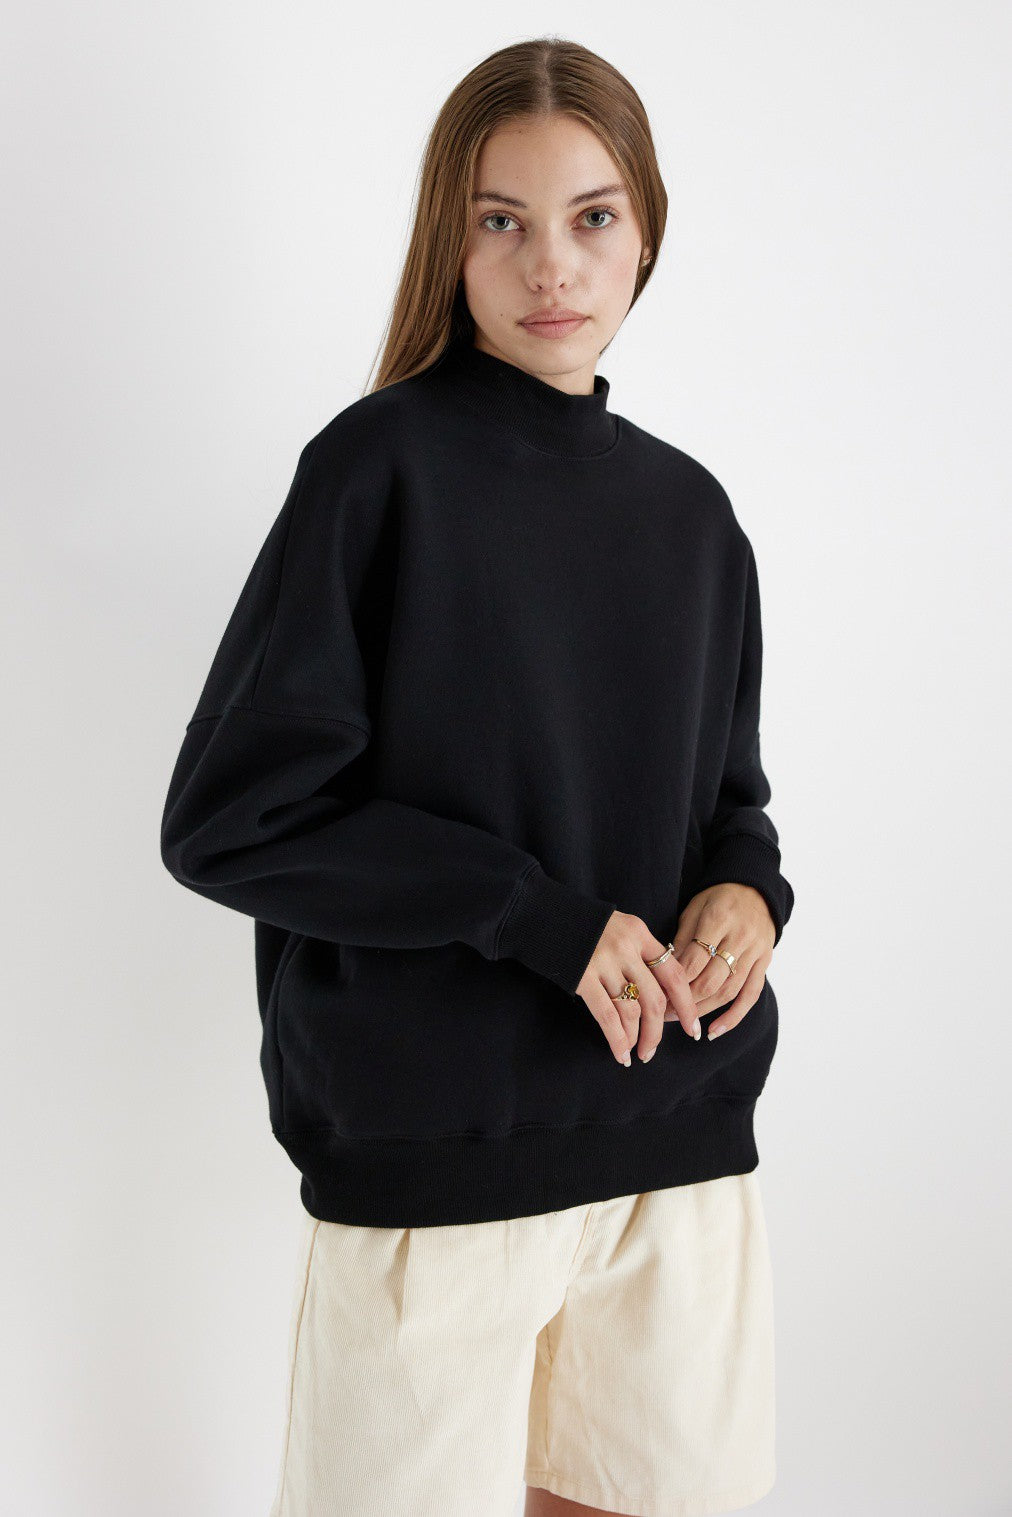 Troy Sweatshirt - Premium  Denim from Mod Ref - Just $43.40! Shop now at shopthedenimbar